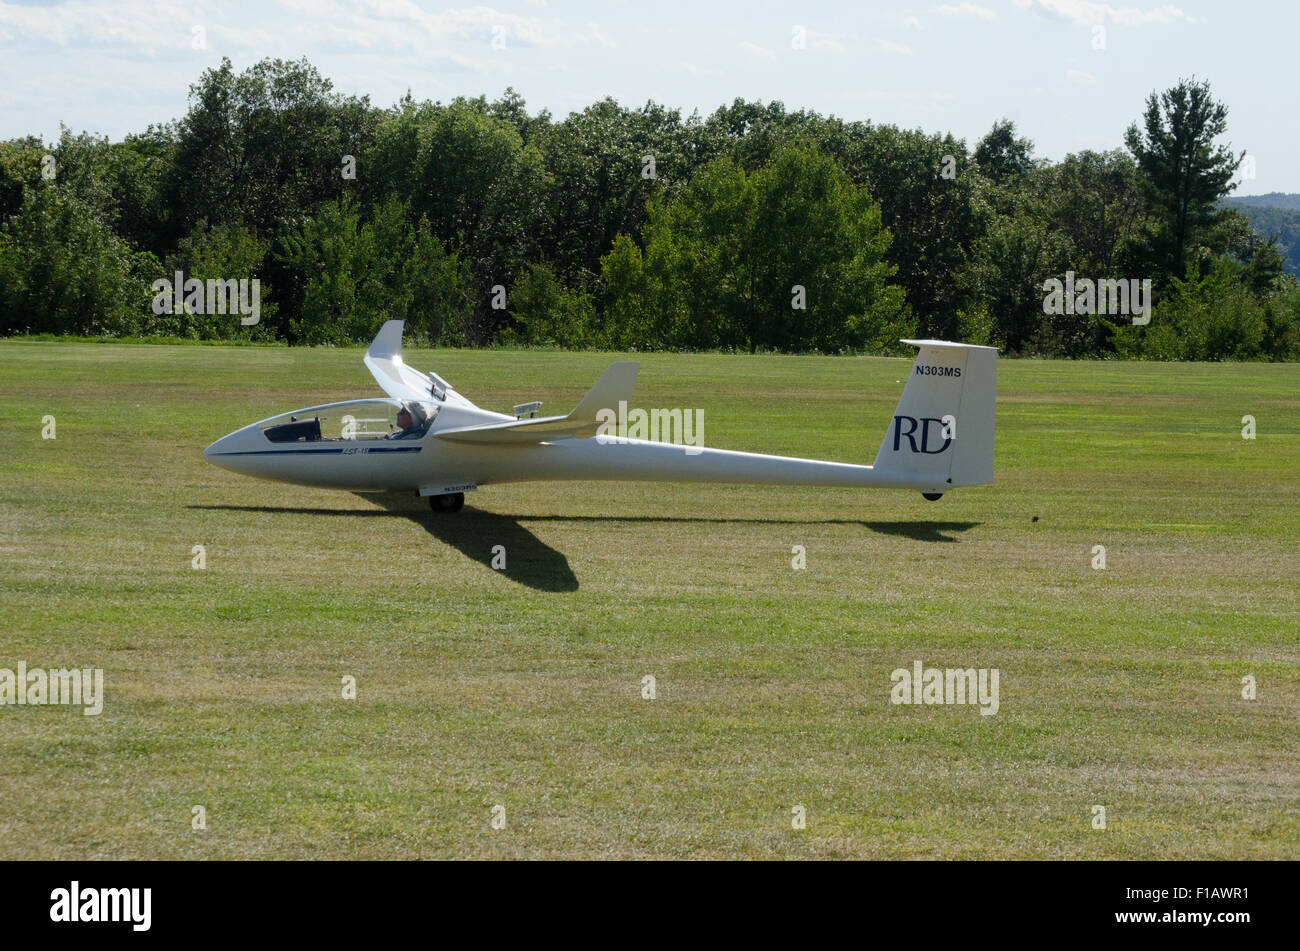 Sailplane touches down on grass runway. Stock Photo